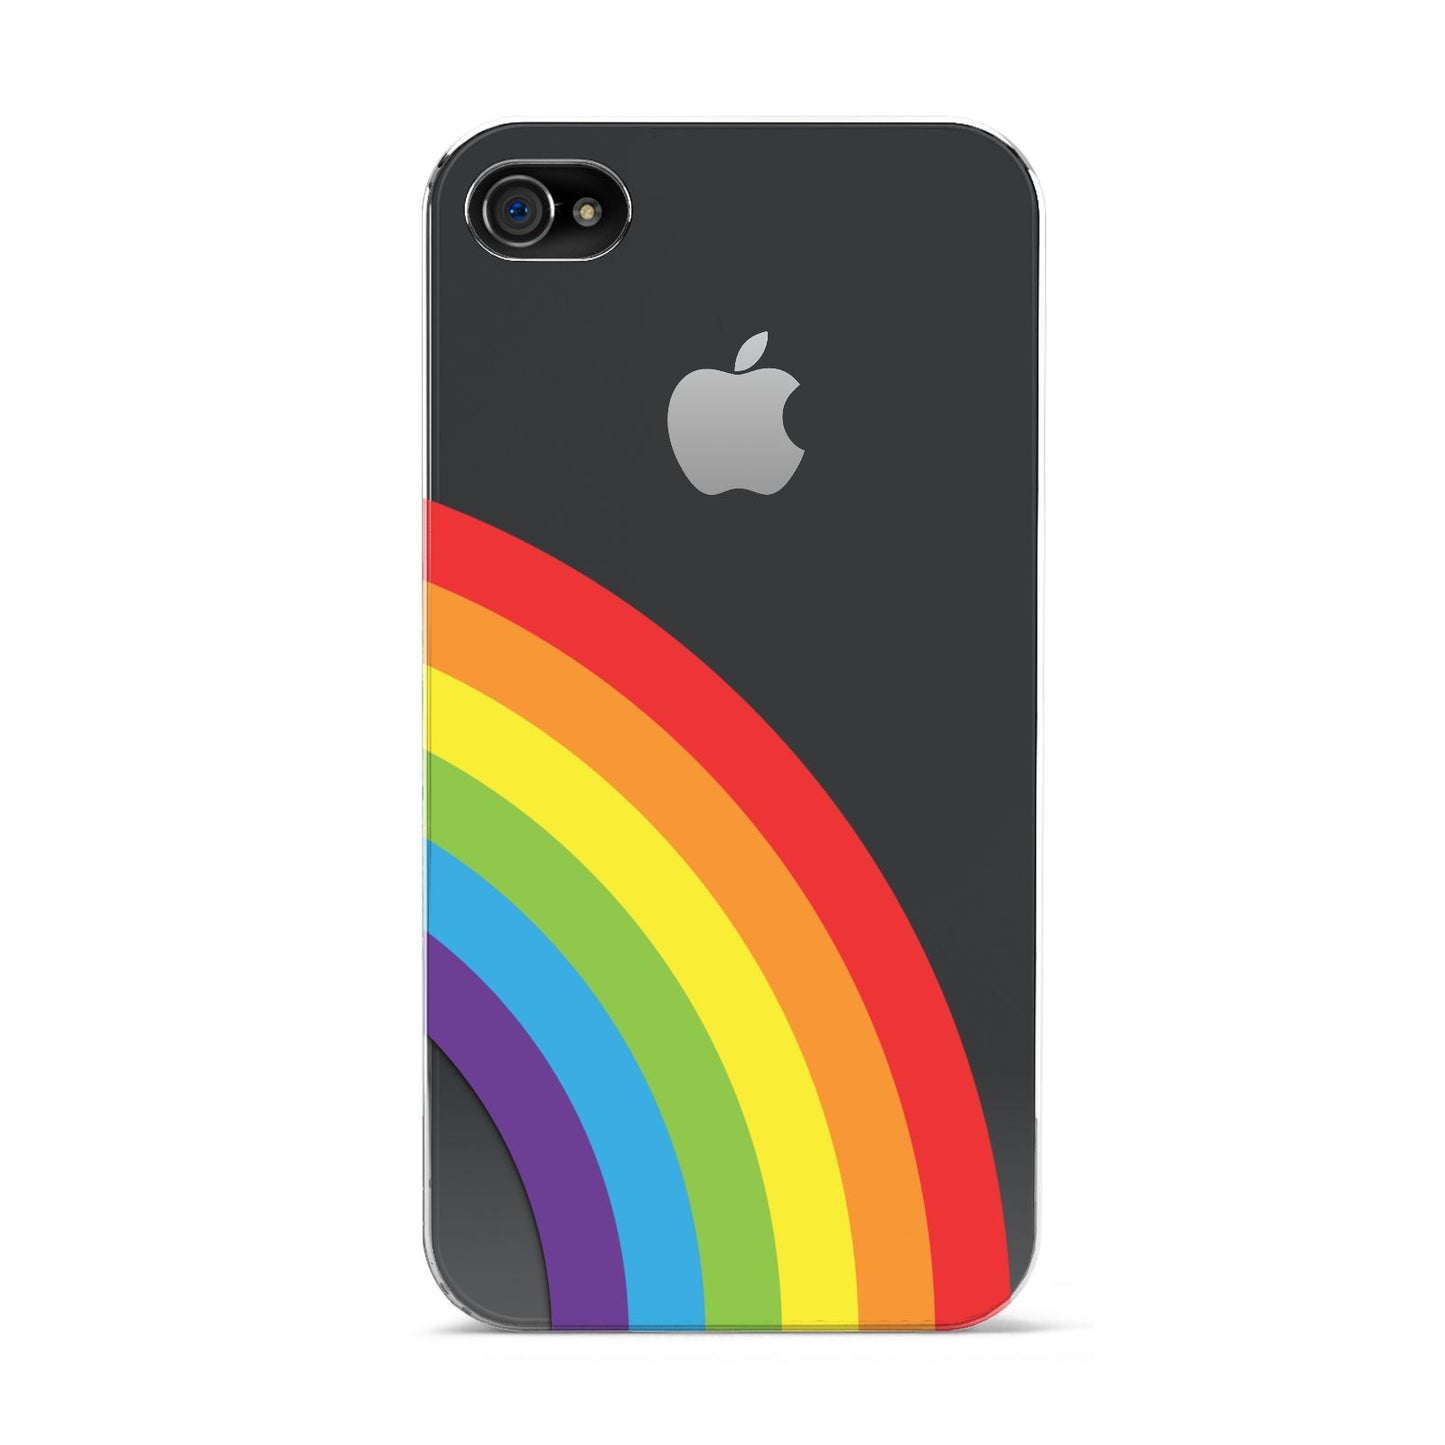 Large Rainbow Apple iPhone 4s Case